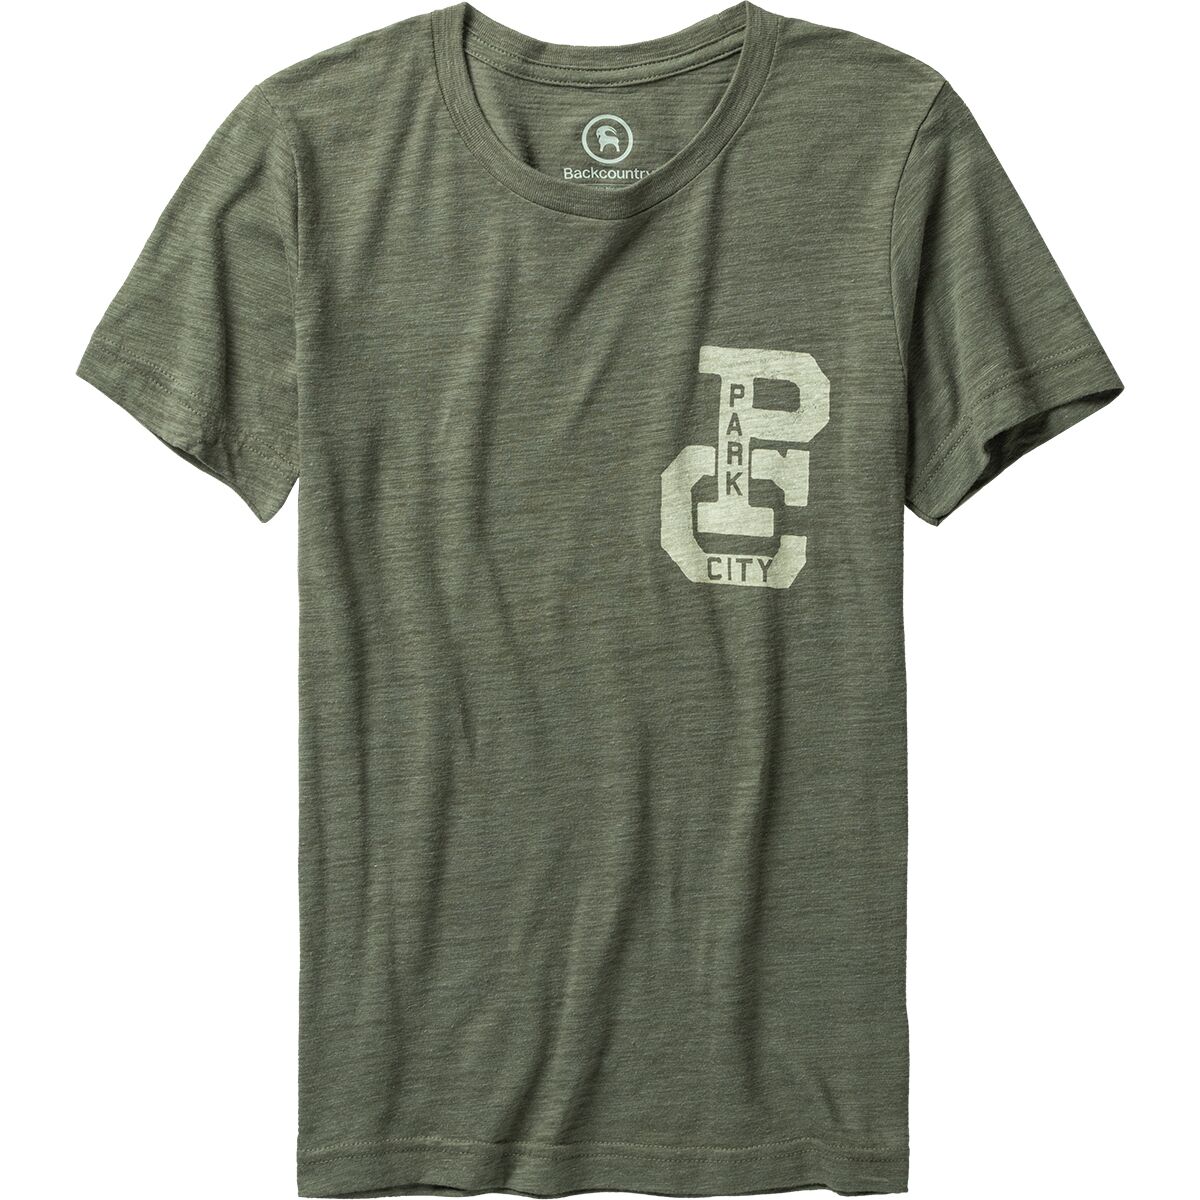 Backcountry Big Park City T-Shirt - Men's